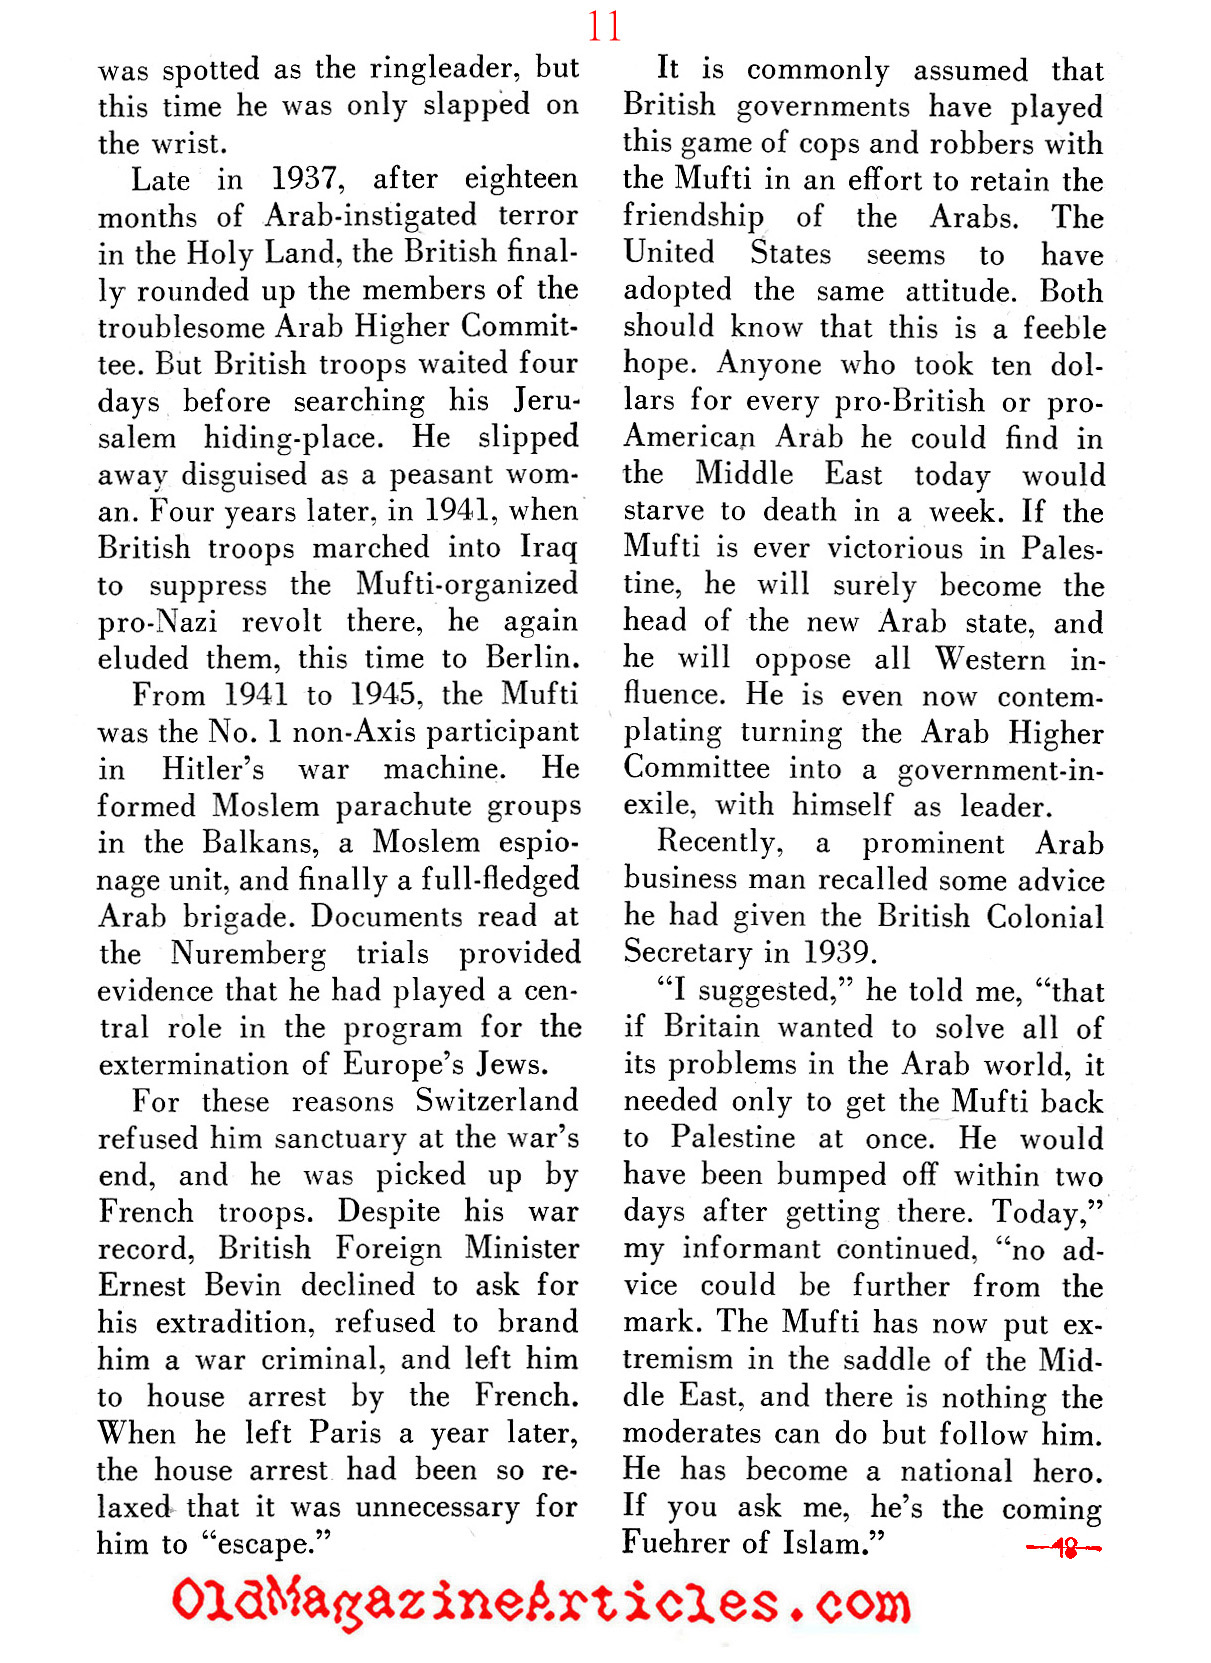 Hitler's Man in Jerusalem ('48 Magazine, 1948)